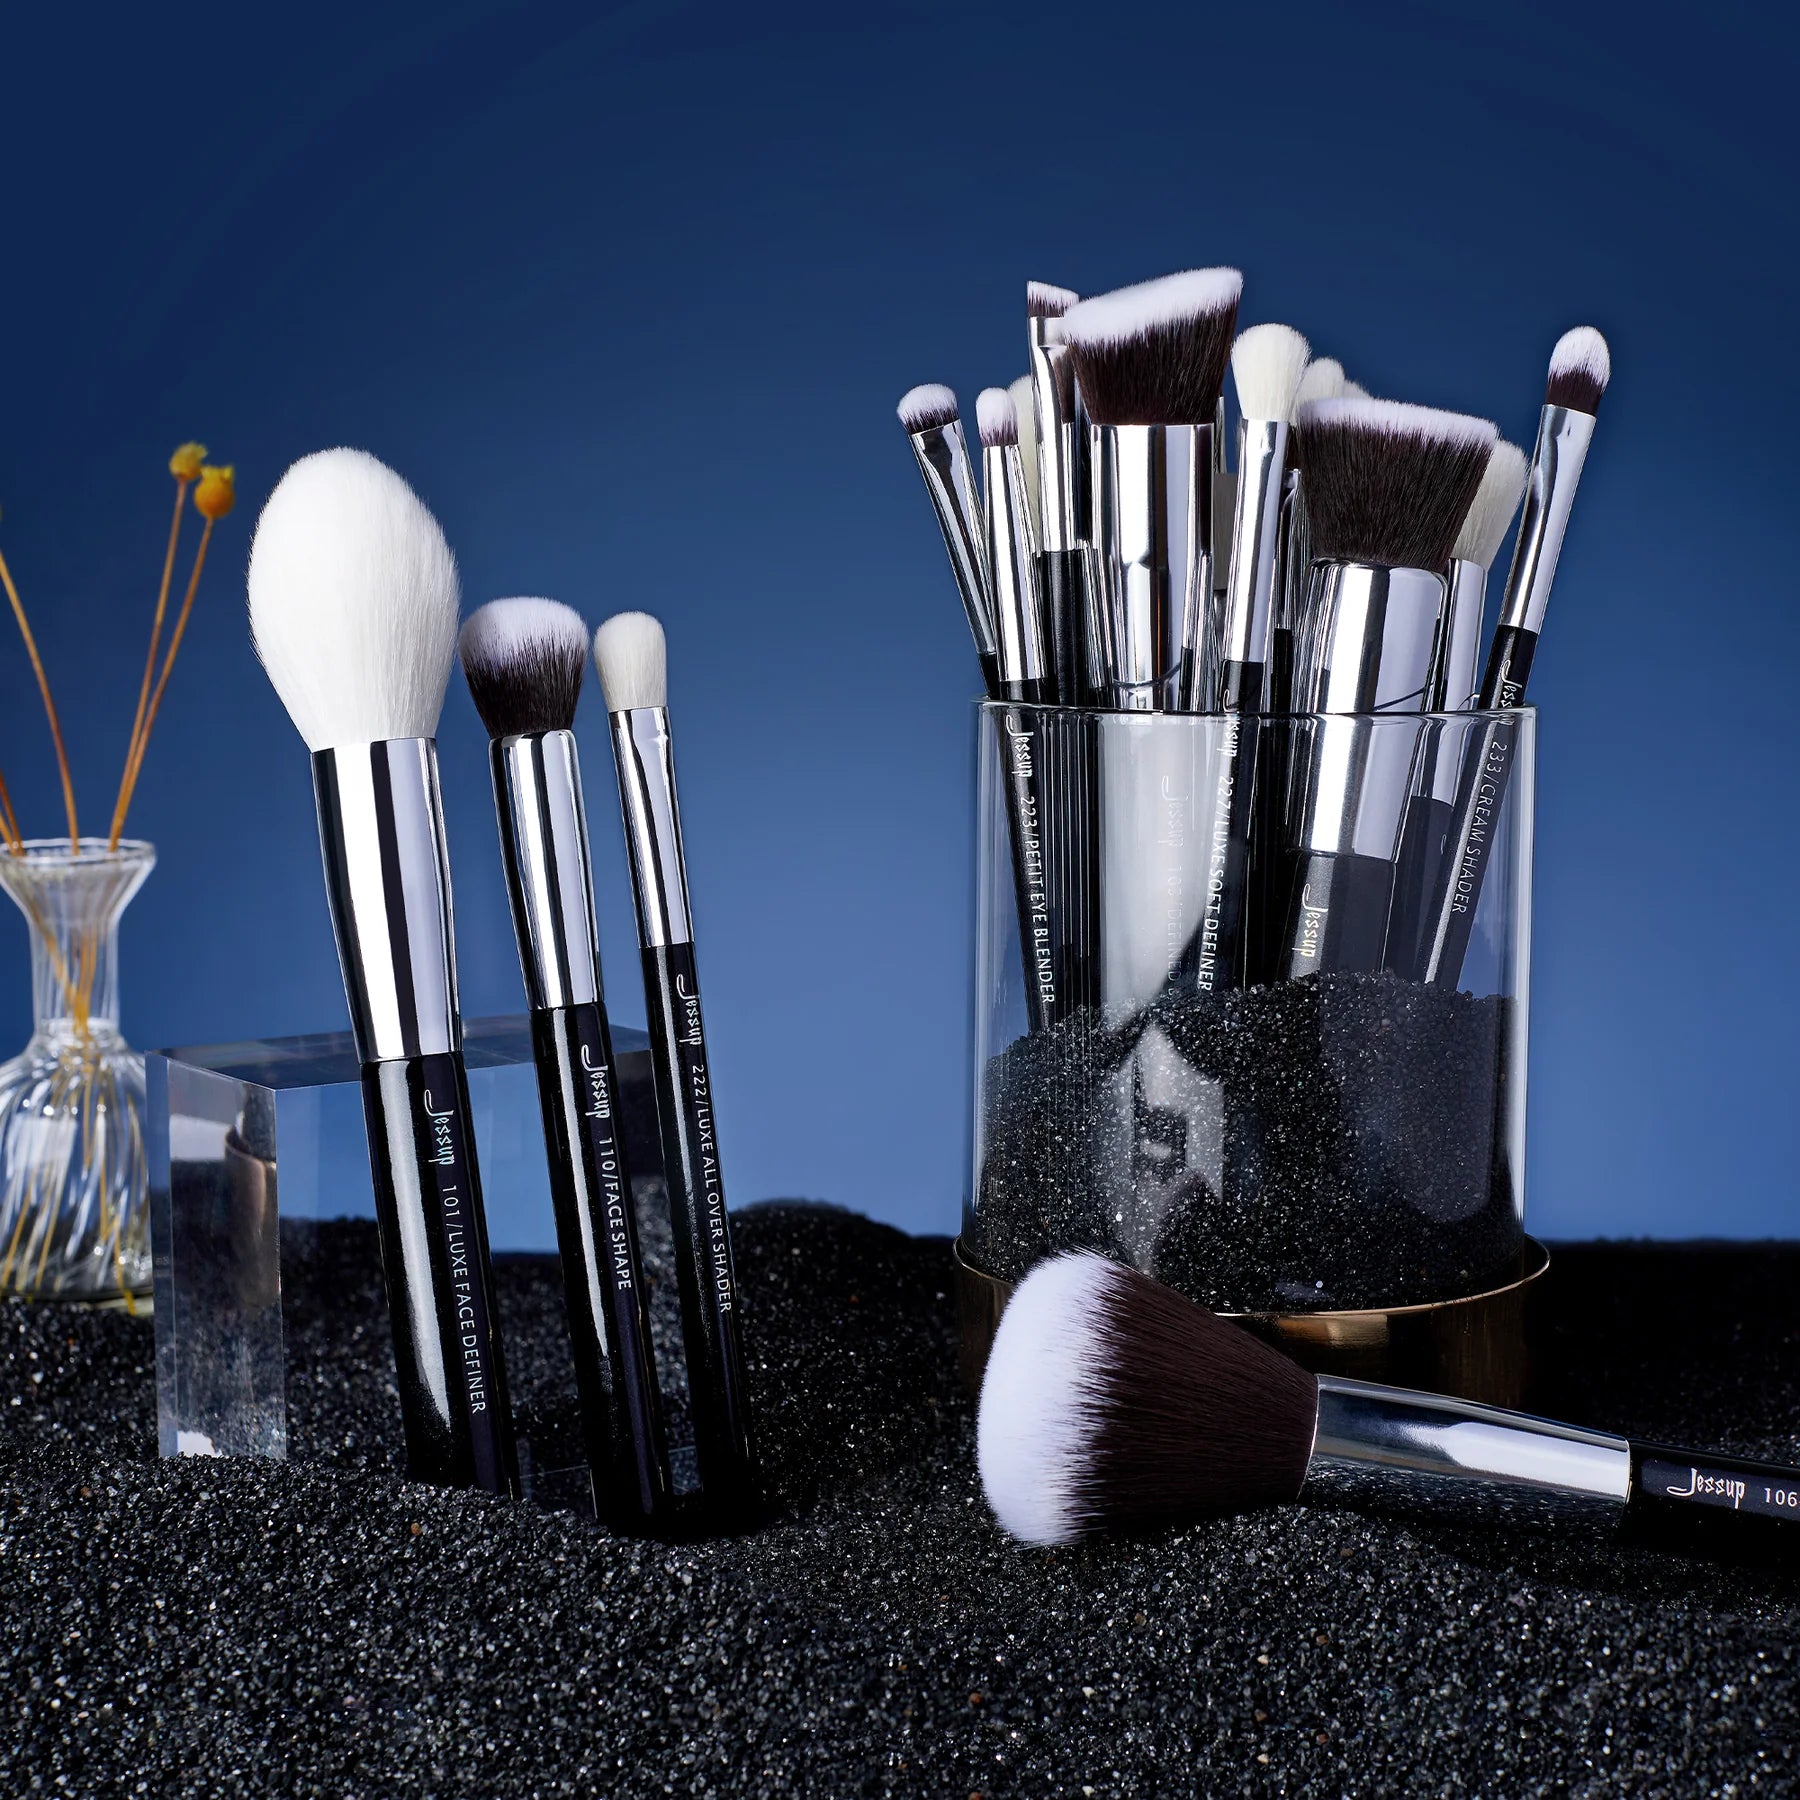 Jessup Eye Makeup Brushes set Professional Eye Blending Brush Synthetic  Blends Shadow Crease Pencil Smoky T338